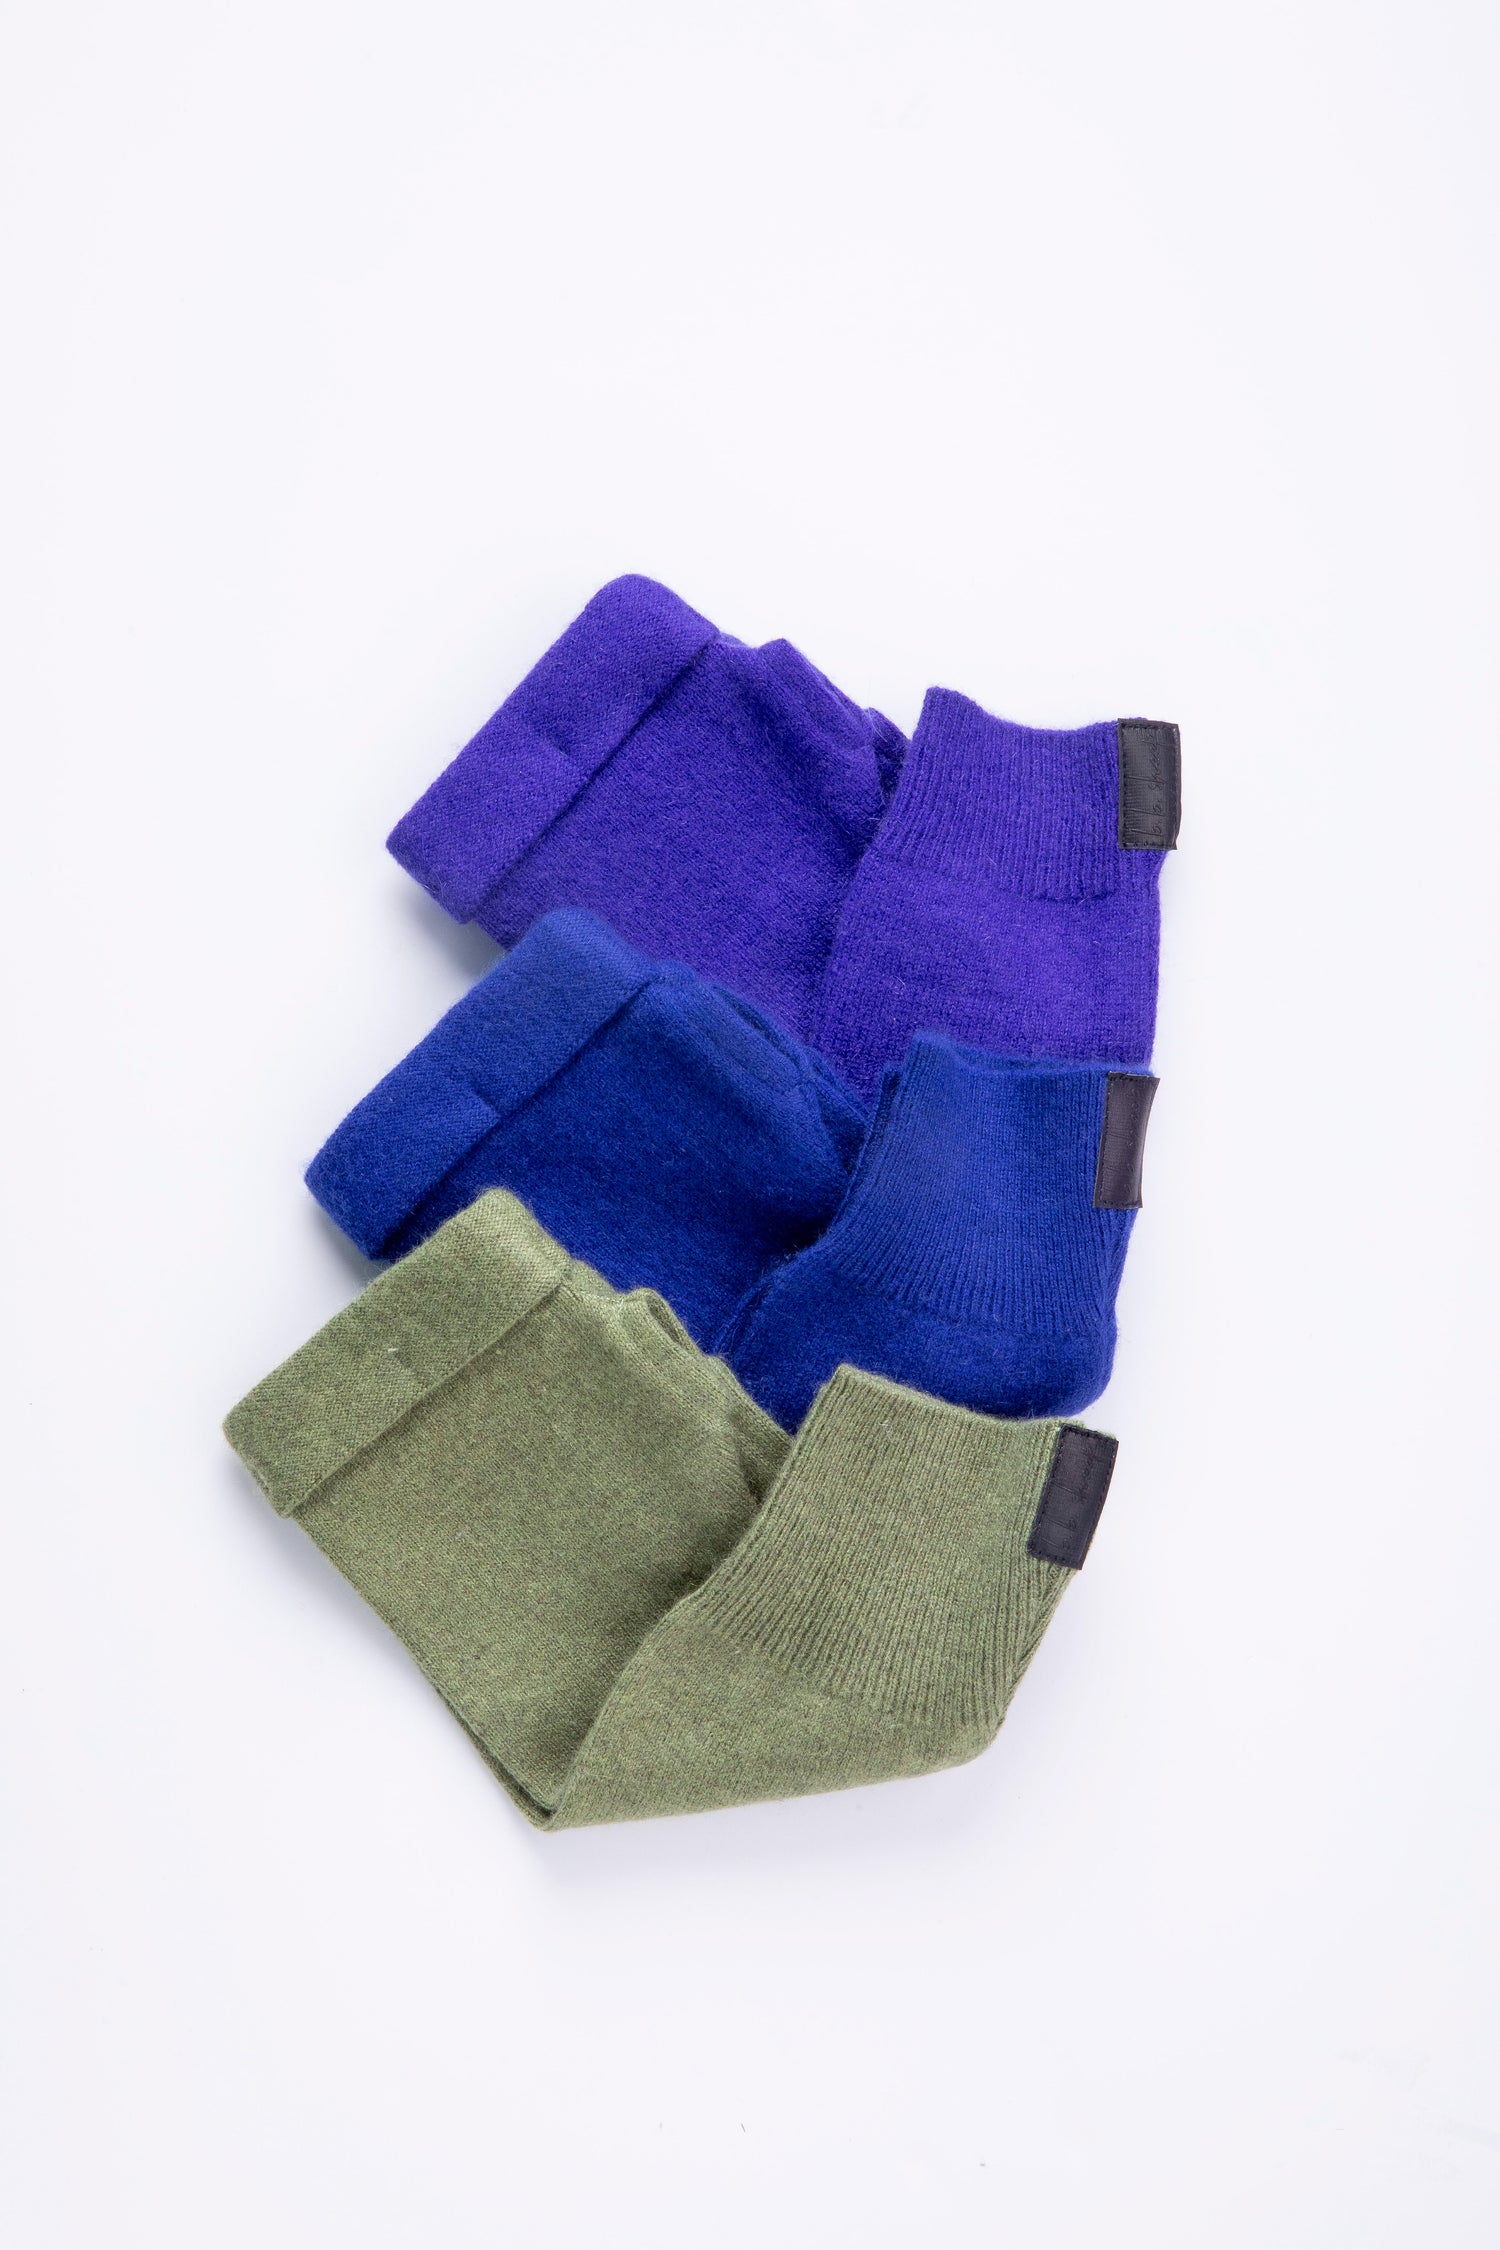 Jewel Fingerless Gloves Set - Purple, Blue and Matcha Green, Box of 3